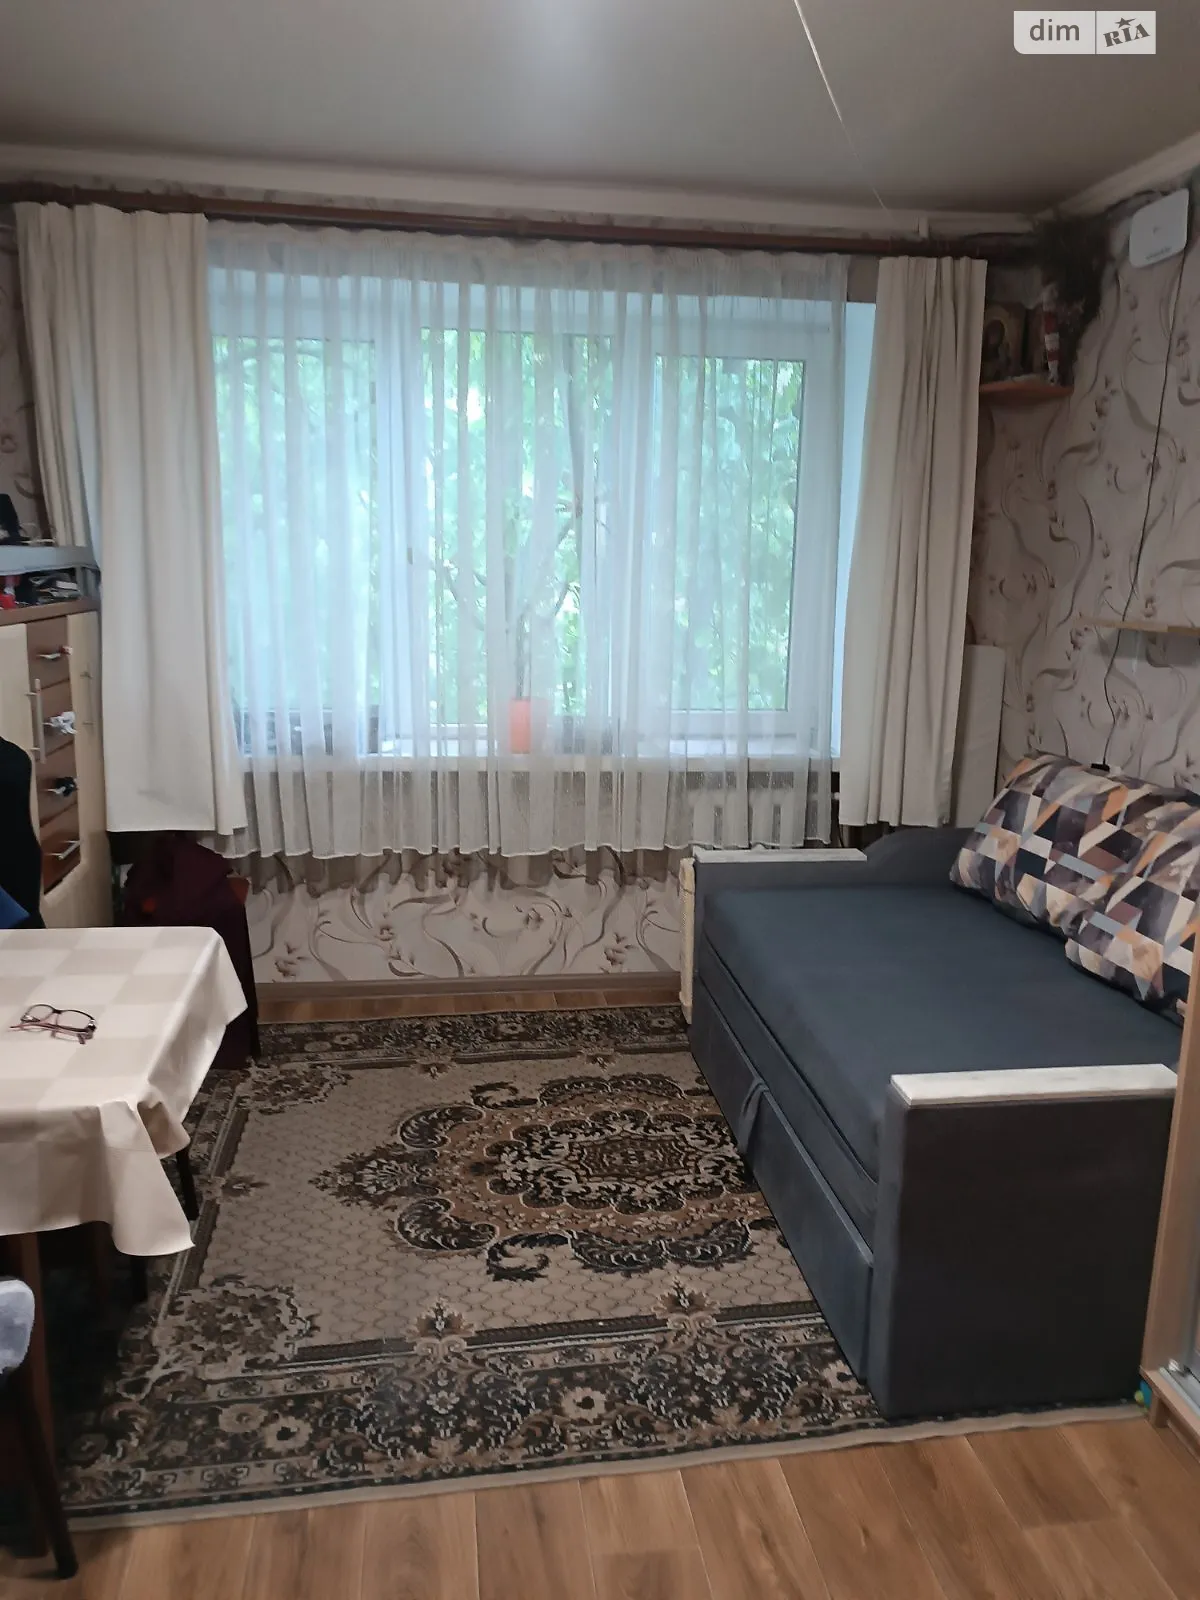 Продается комната 18 кв. м в Одессе, цена: 9000 $ - фото 1